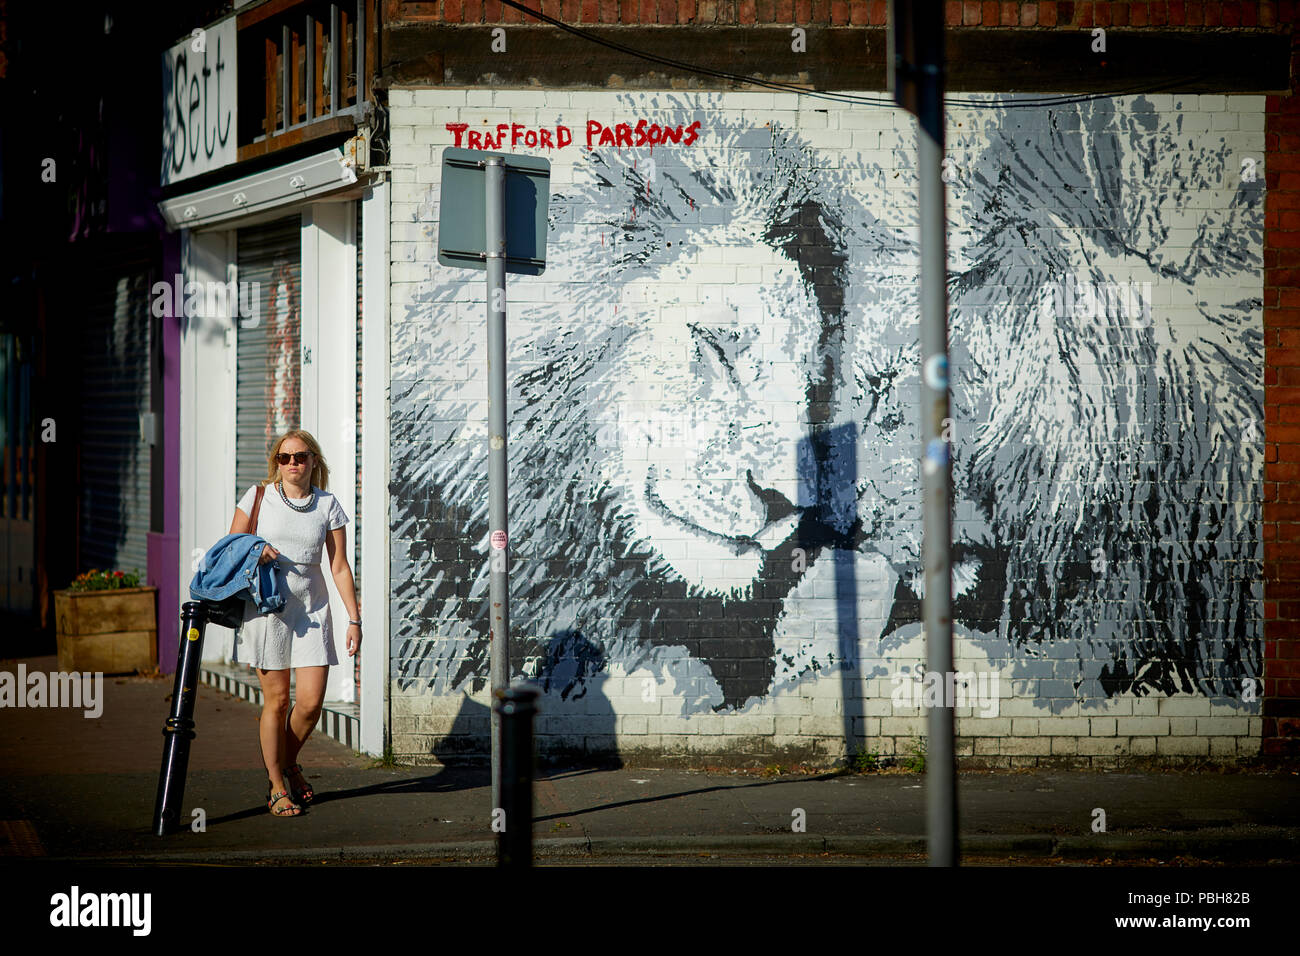 Burton Road West Didsbury, South Manchester lion murale di arte di strada dal Trafford Parsons Foto Stock